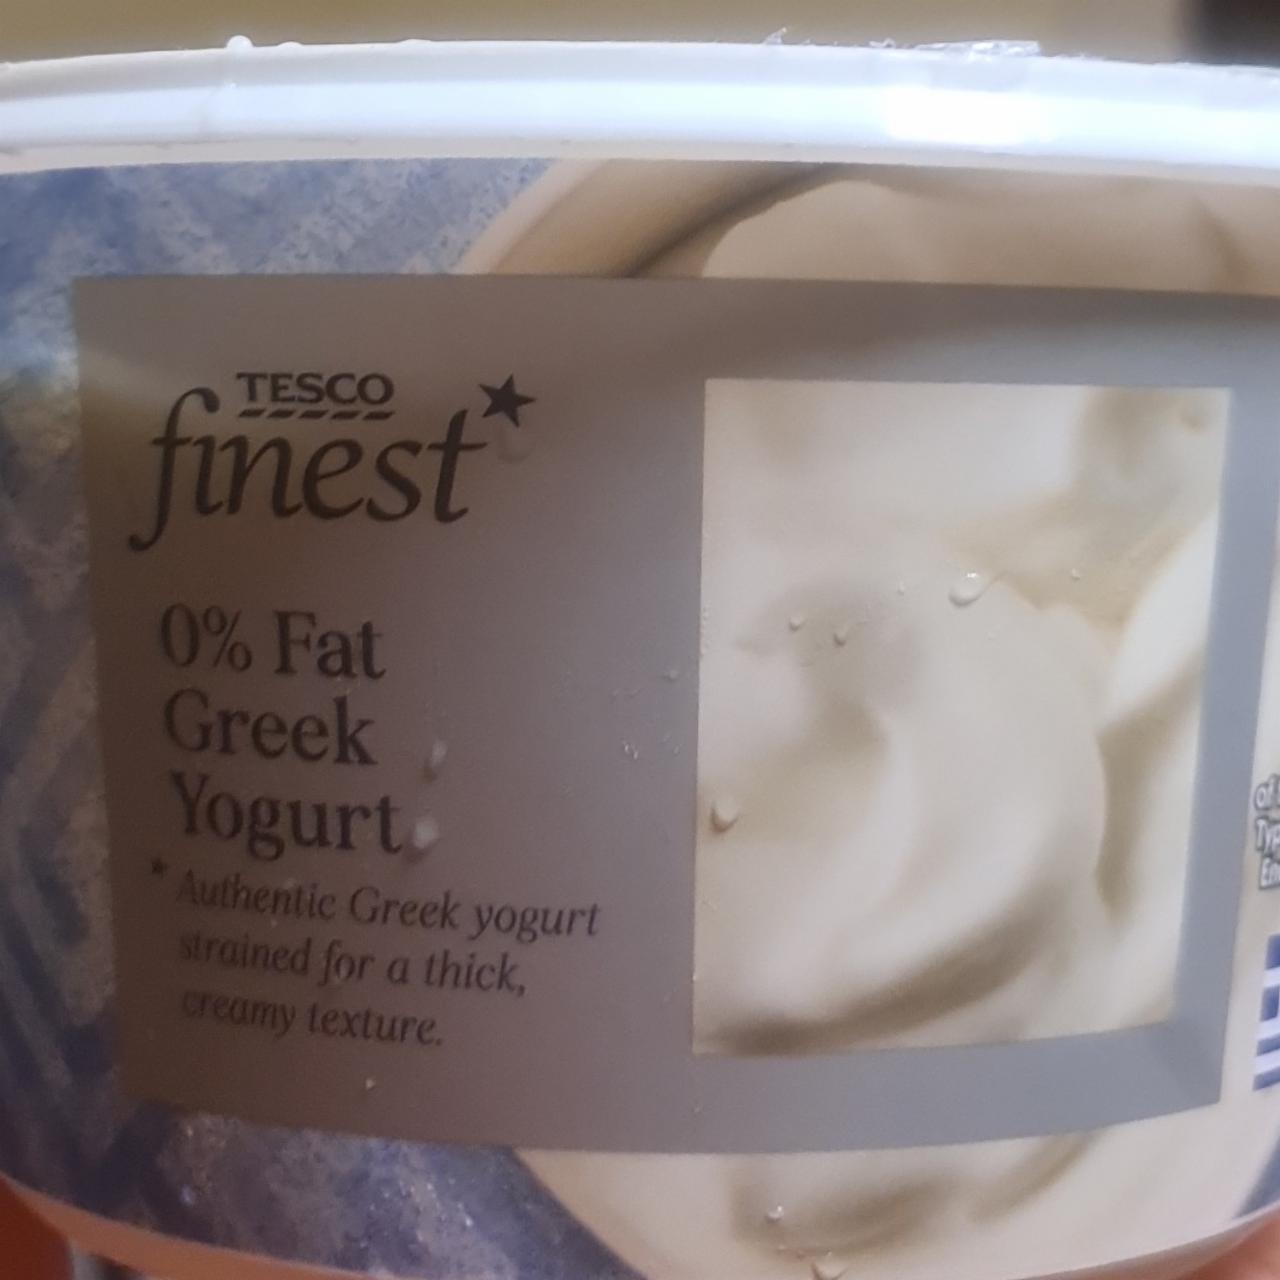 Fotografie - 0% Fat Greek Yogurt Tesco finest